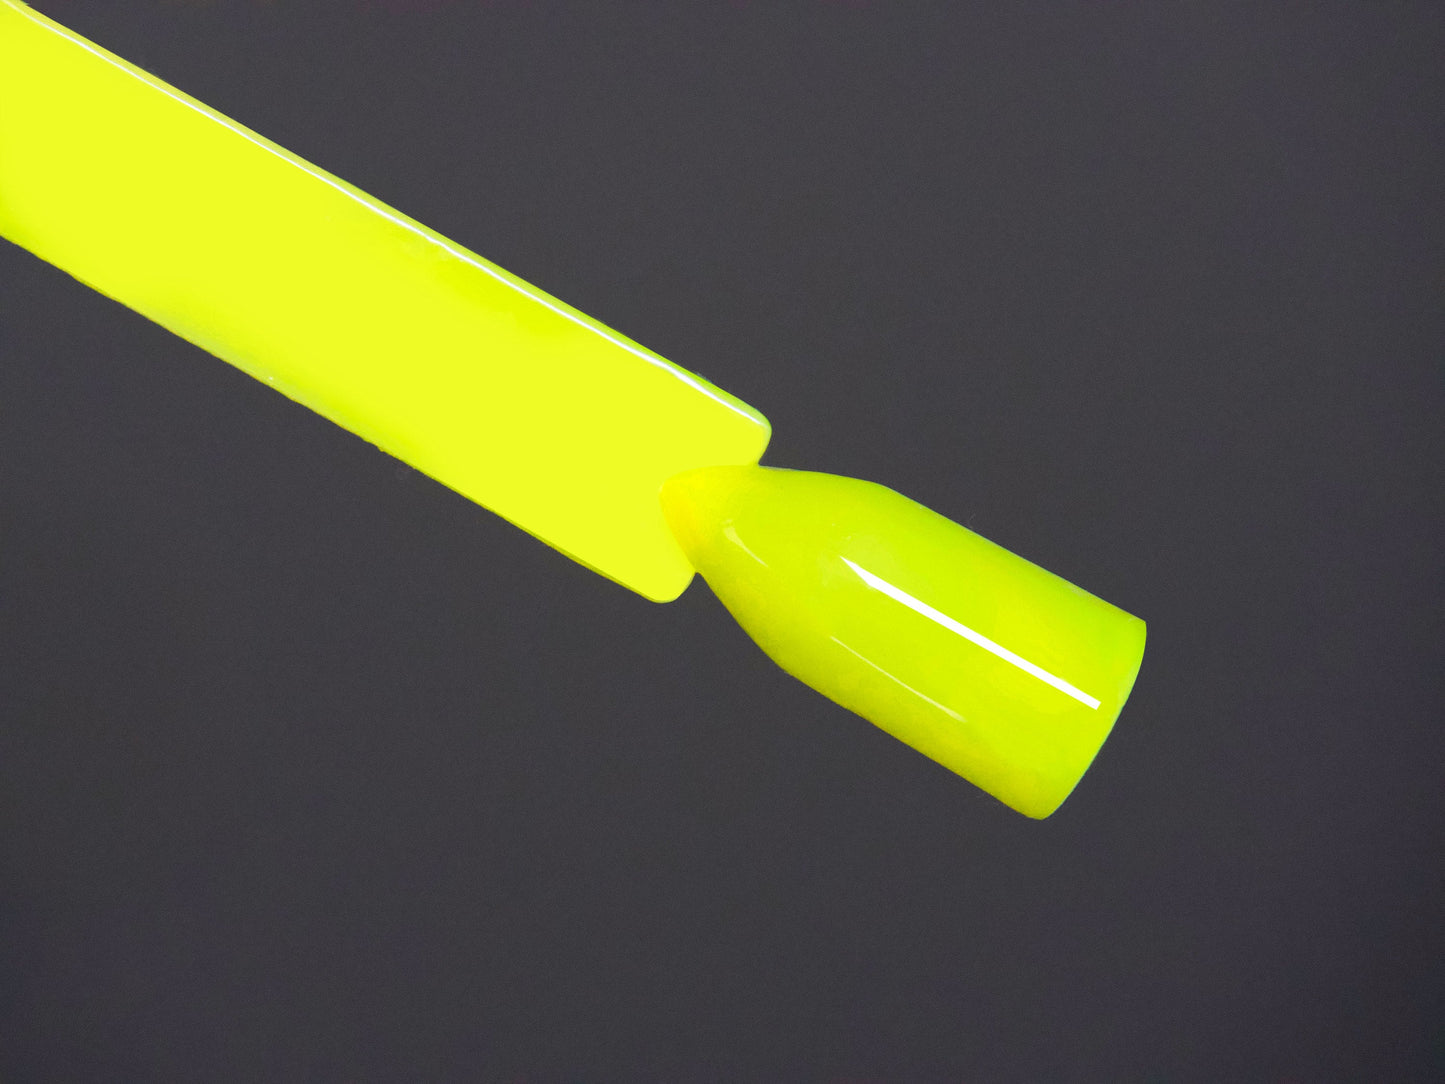 15ml Neon Luminescent Yellow Orange UV Gel/ Neon Fluorescent Gel polish/ Bright Summer Nail Night Club Bar Pop Nail Art